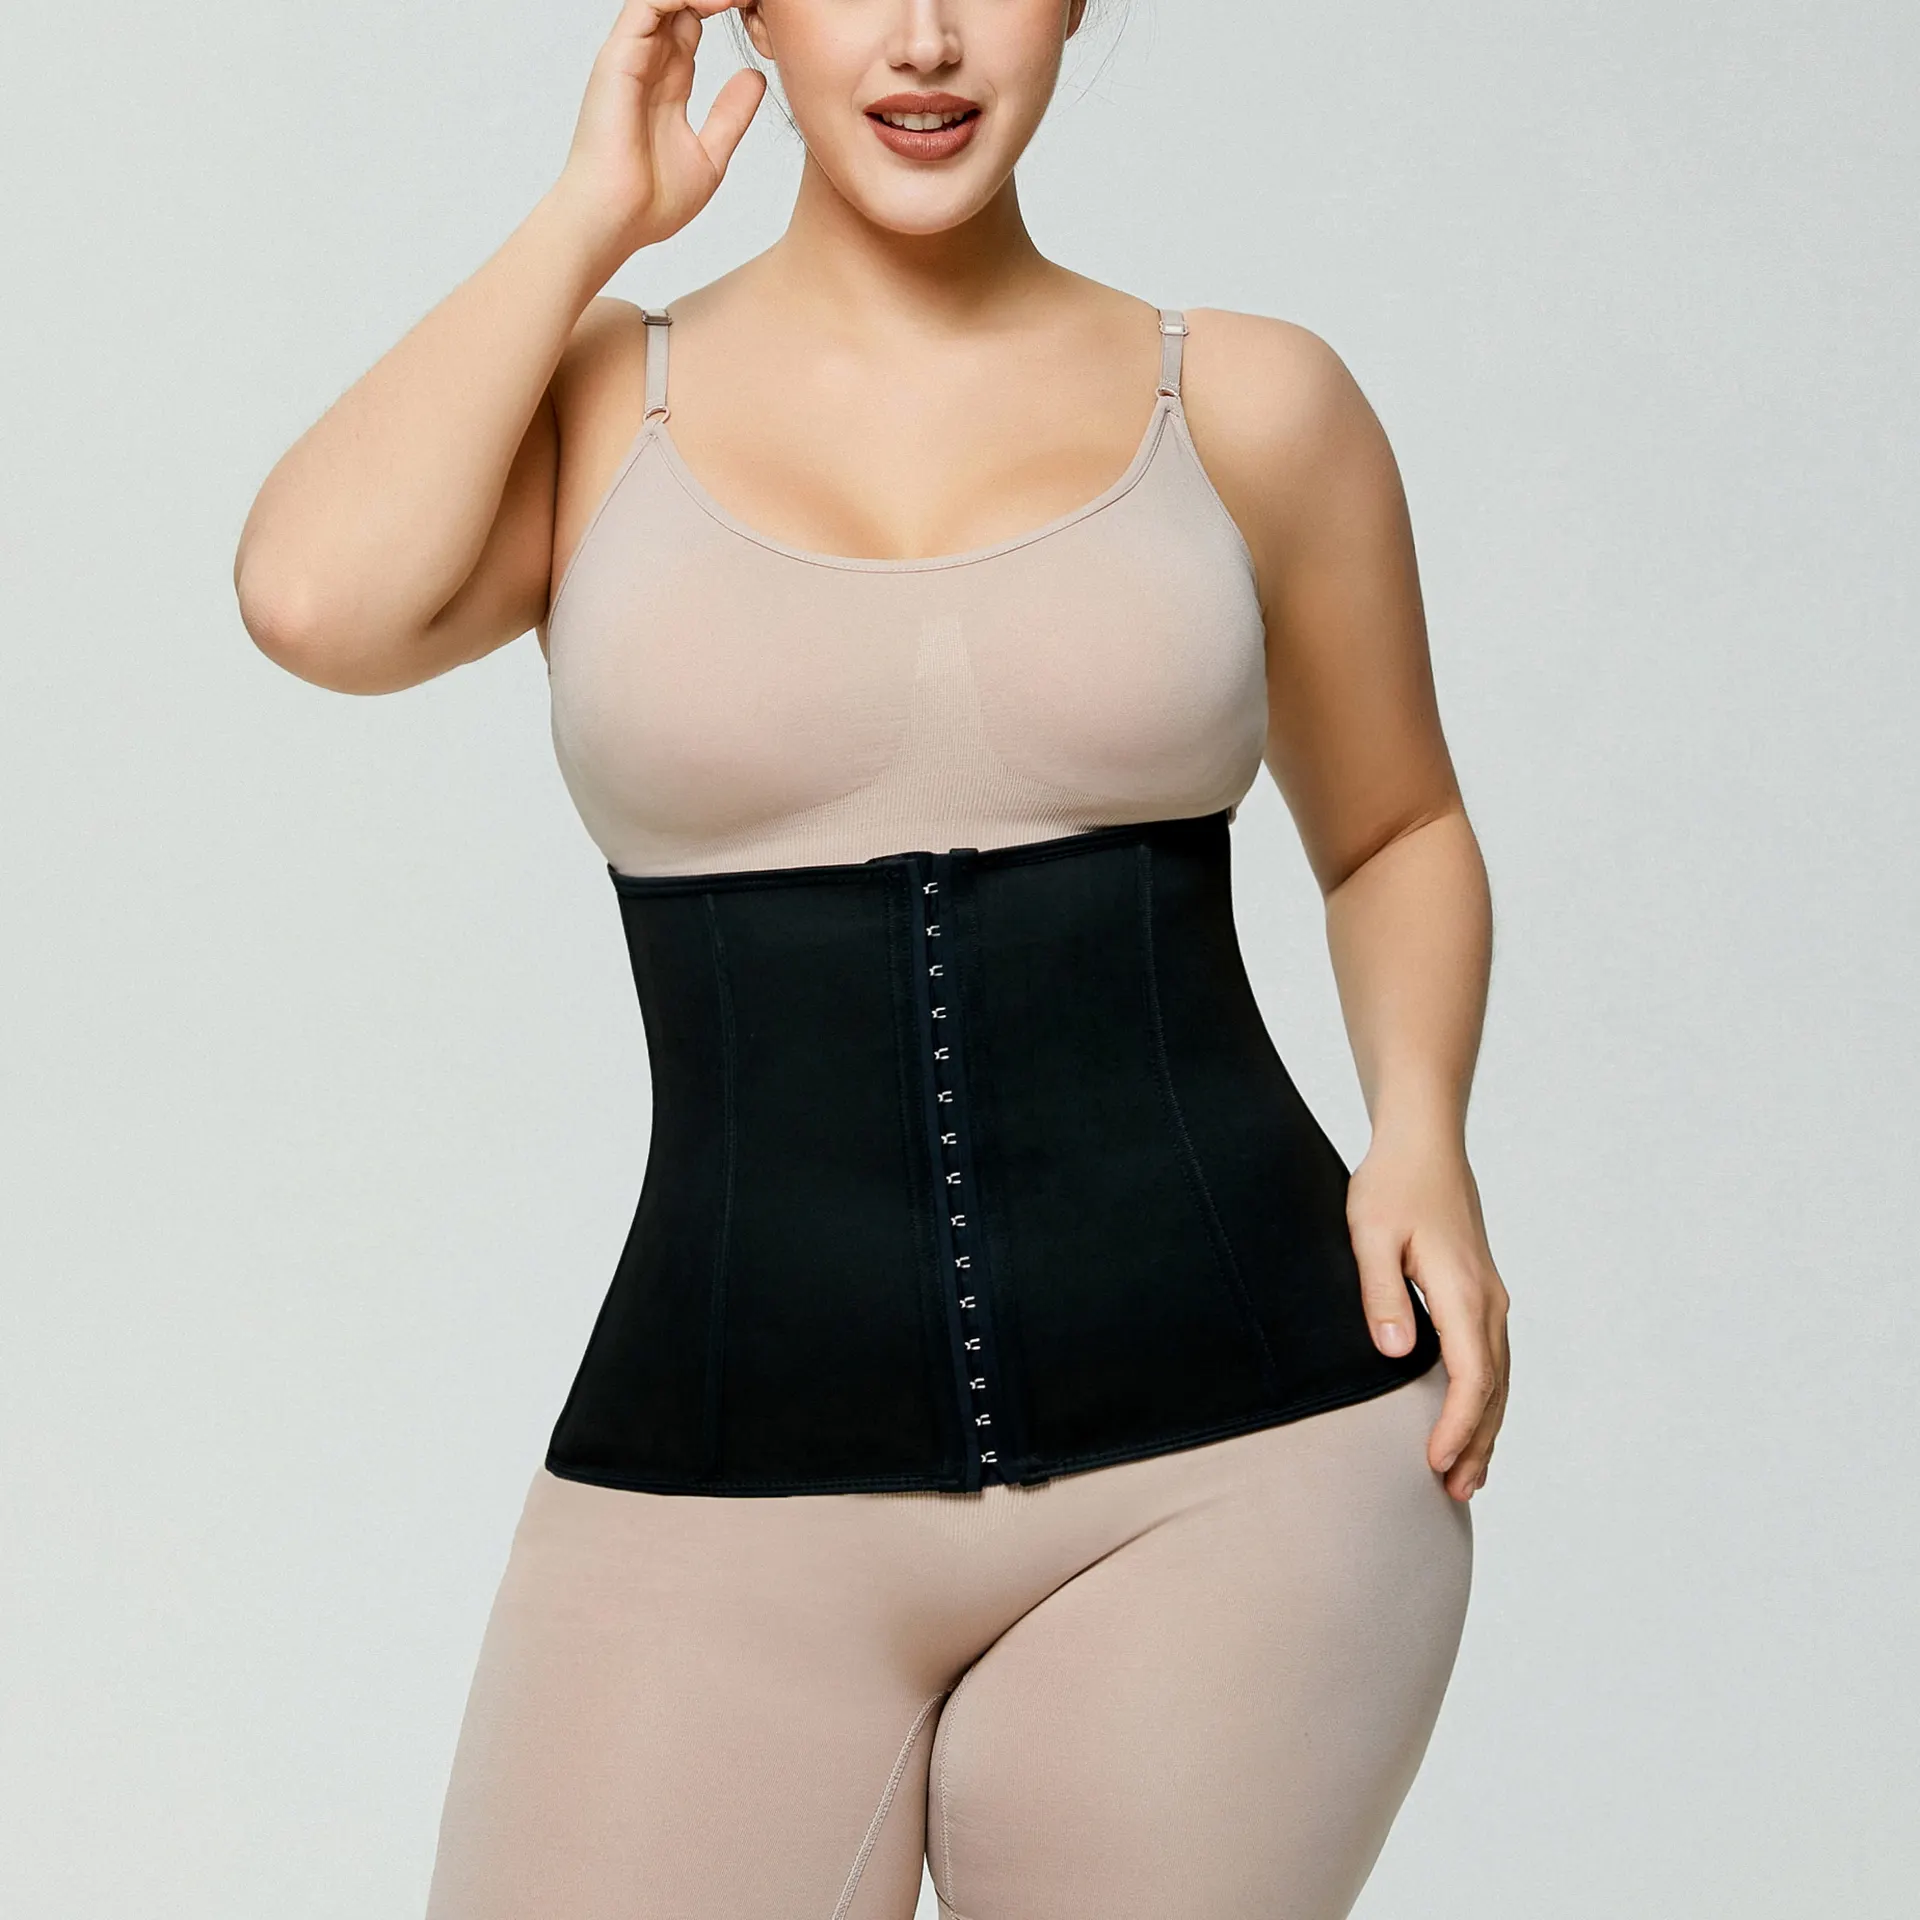 Oem New Arrivals Slimming Sheath The Belly Neoprene Corset Body Shaper Back Support Shapewear For Women Tummy Control